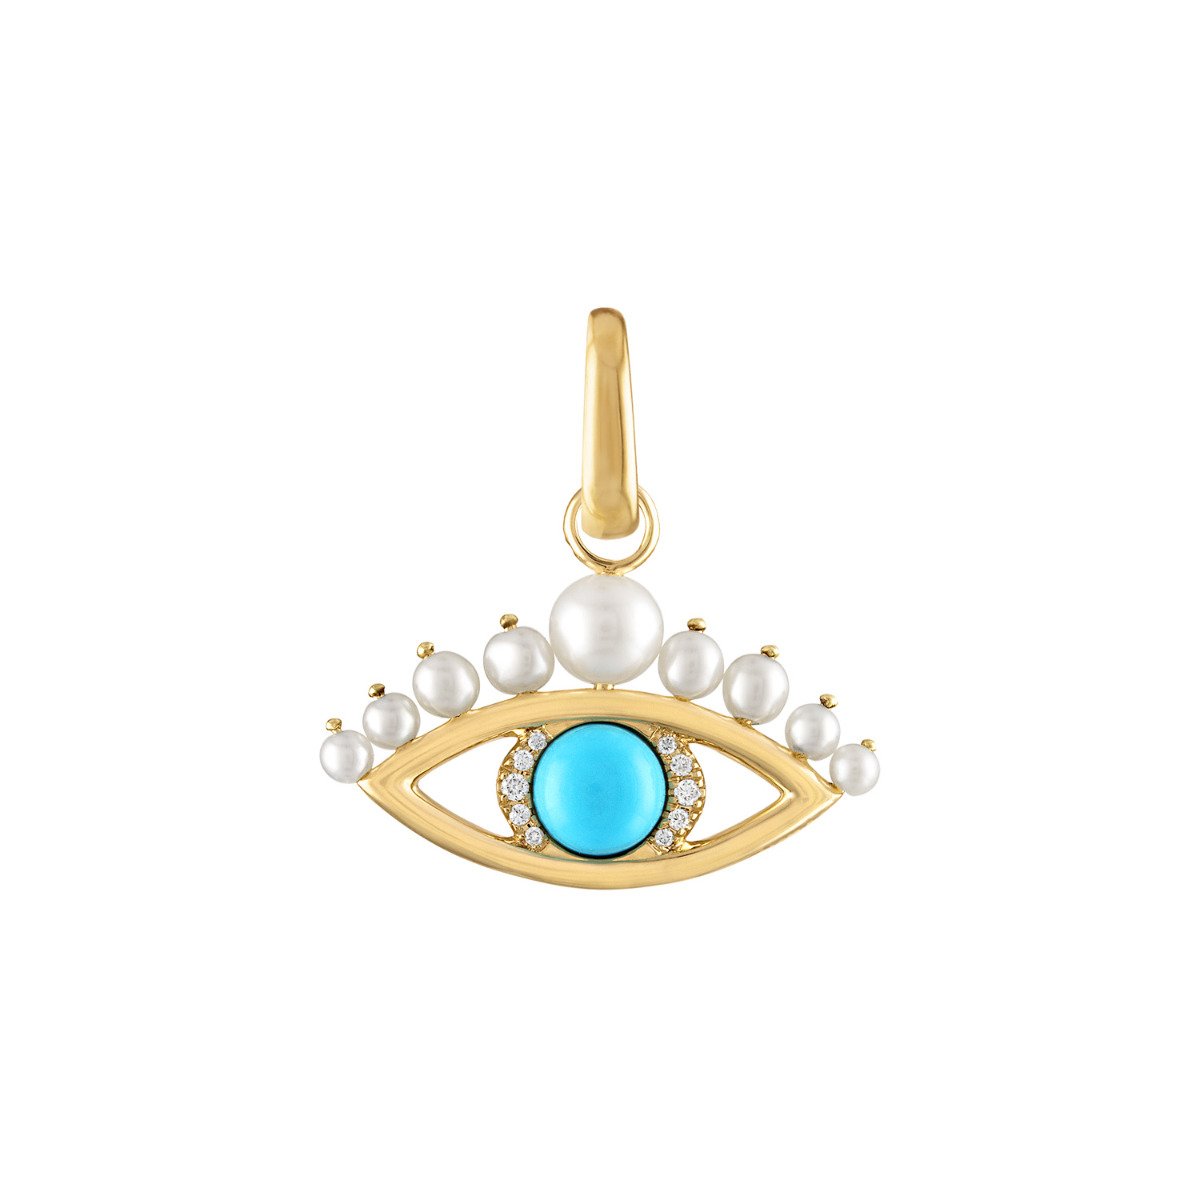 Eden Presley "Mantra" Protect Yourself Diamond, Pearl & Turquoise Pendant